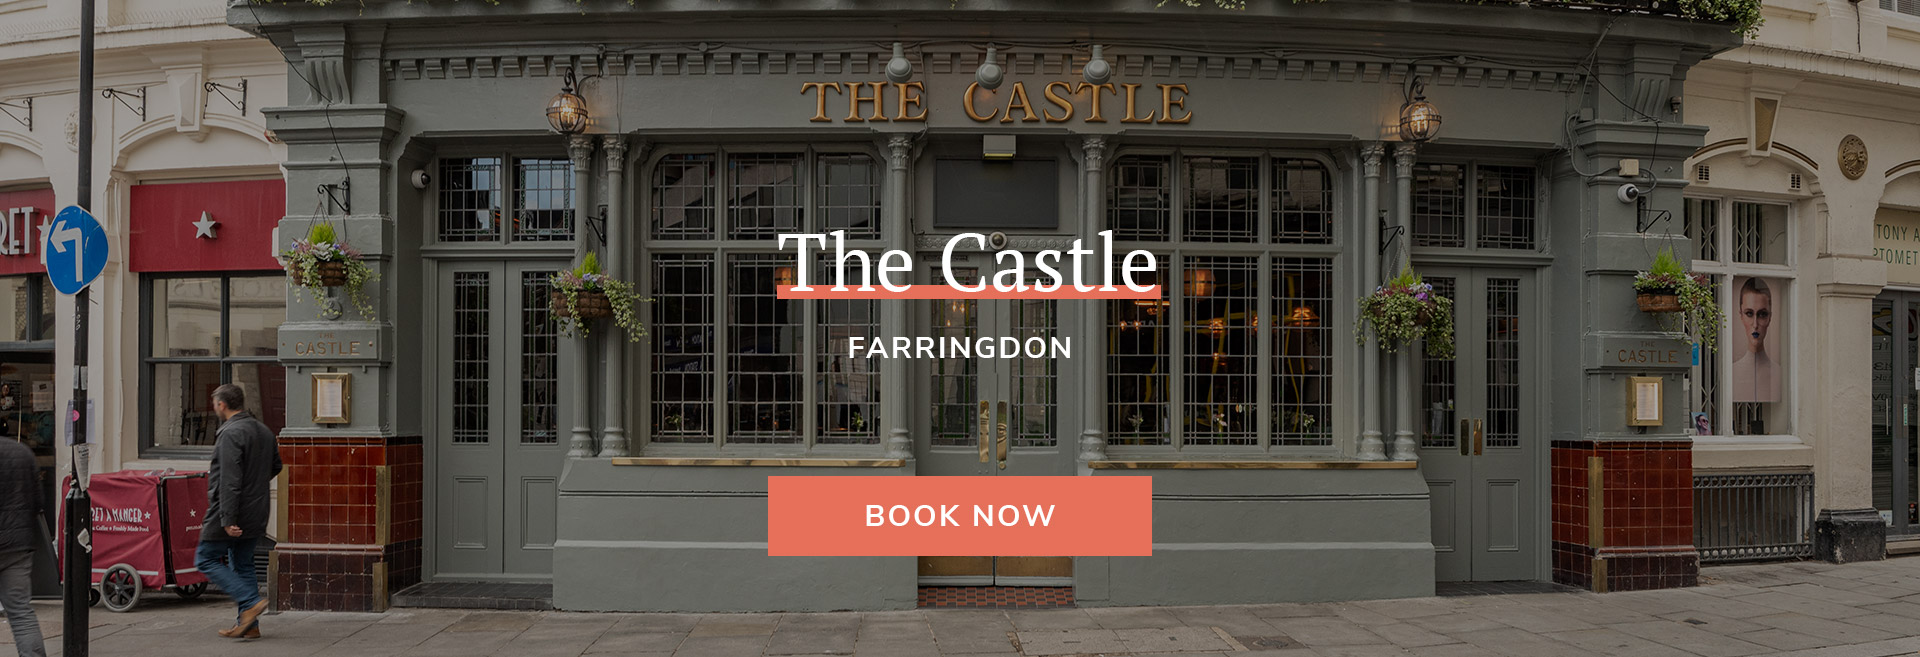 The Castle Farringdon Banner 1